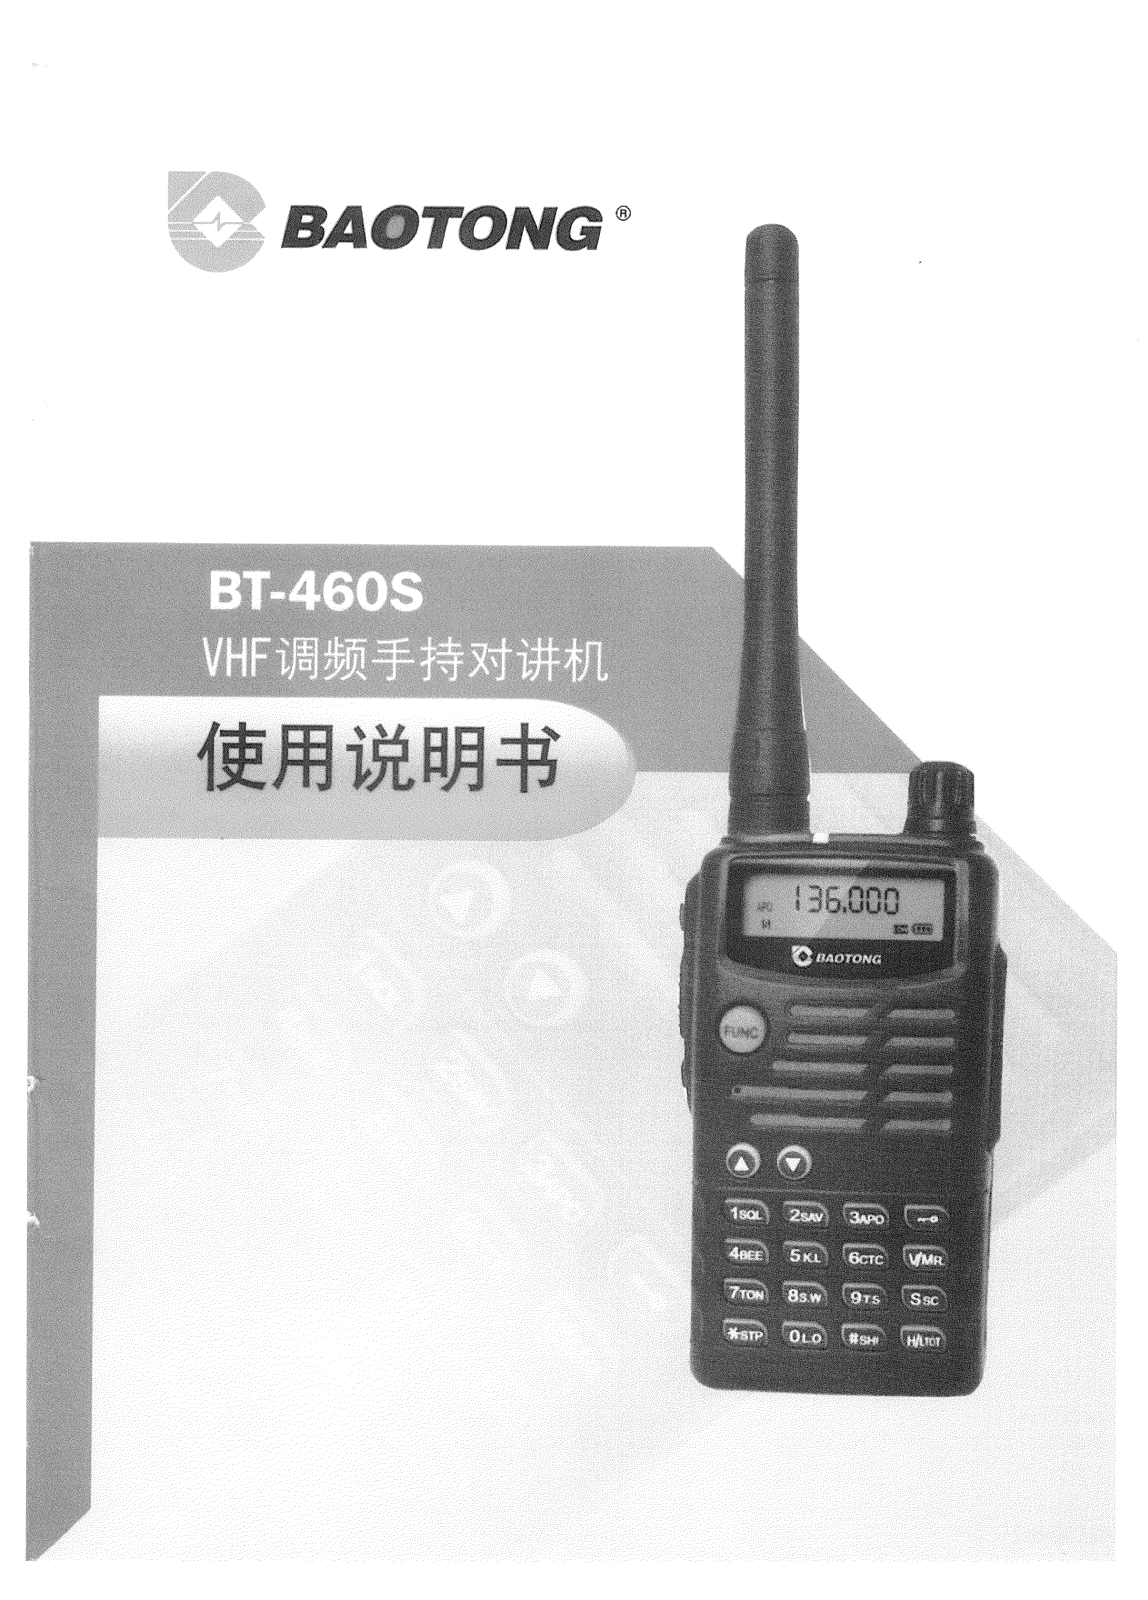 Baotong BT-460S Manual